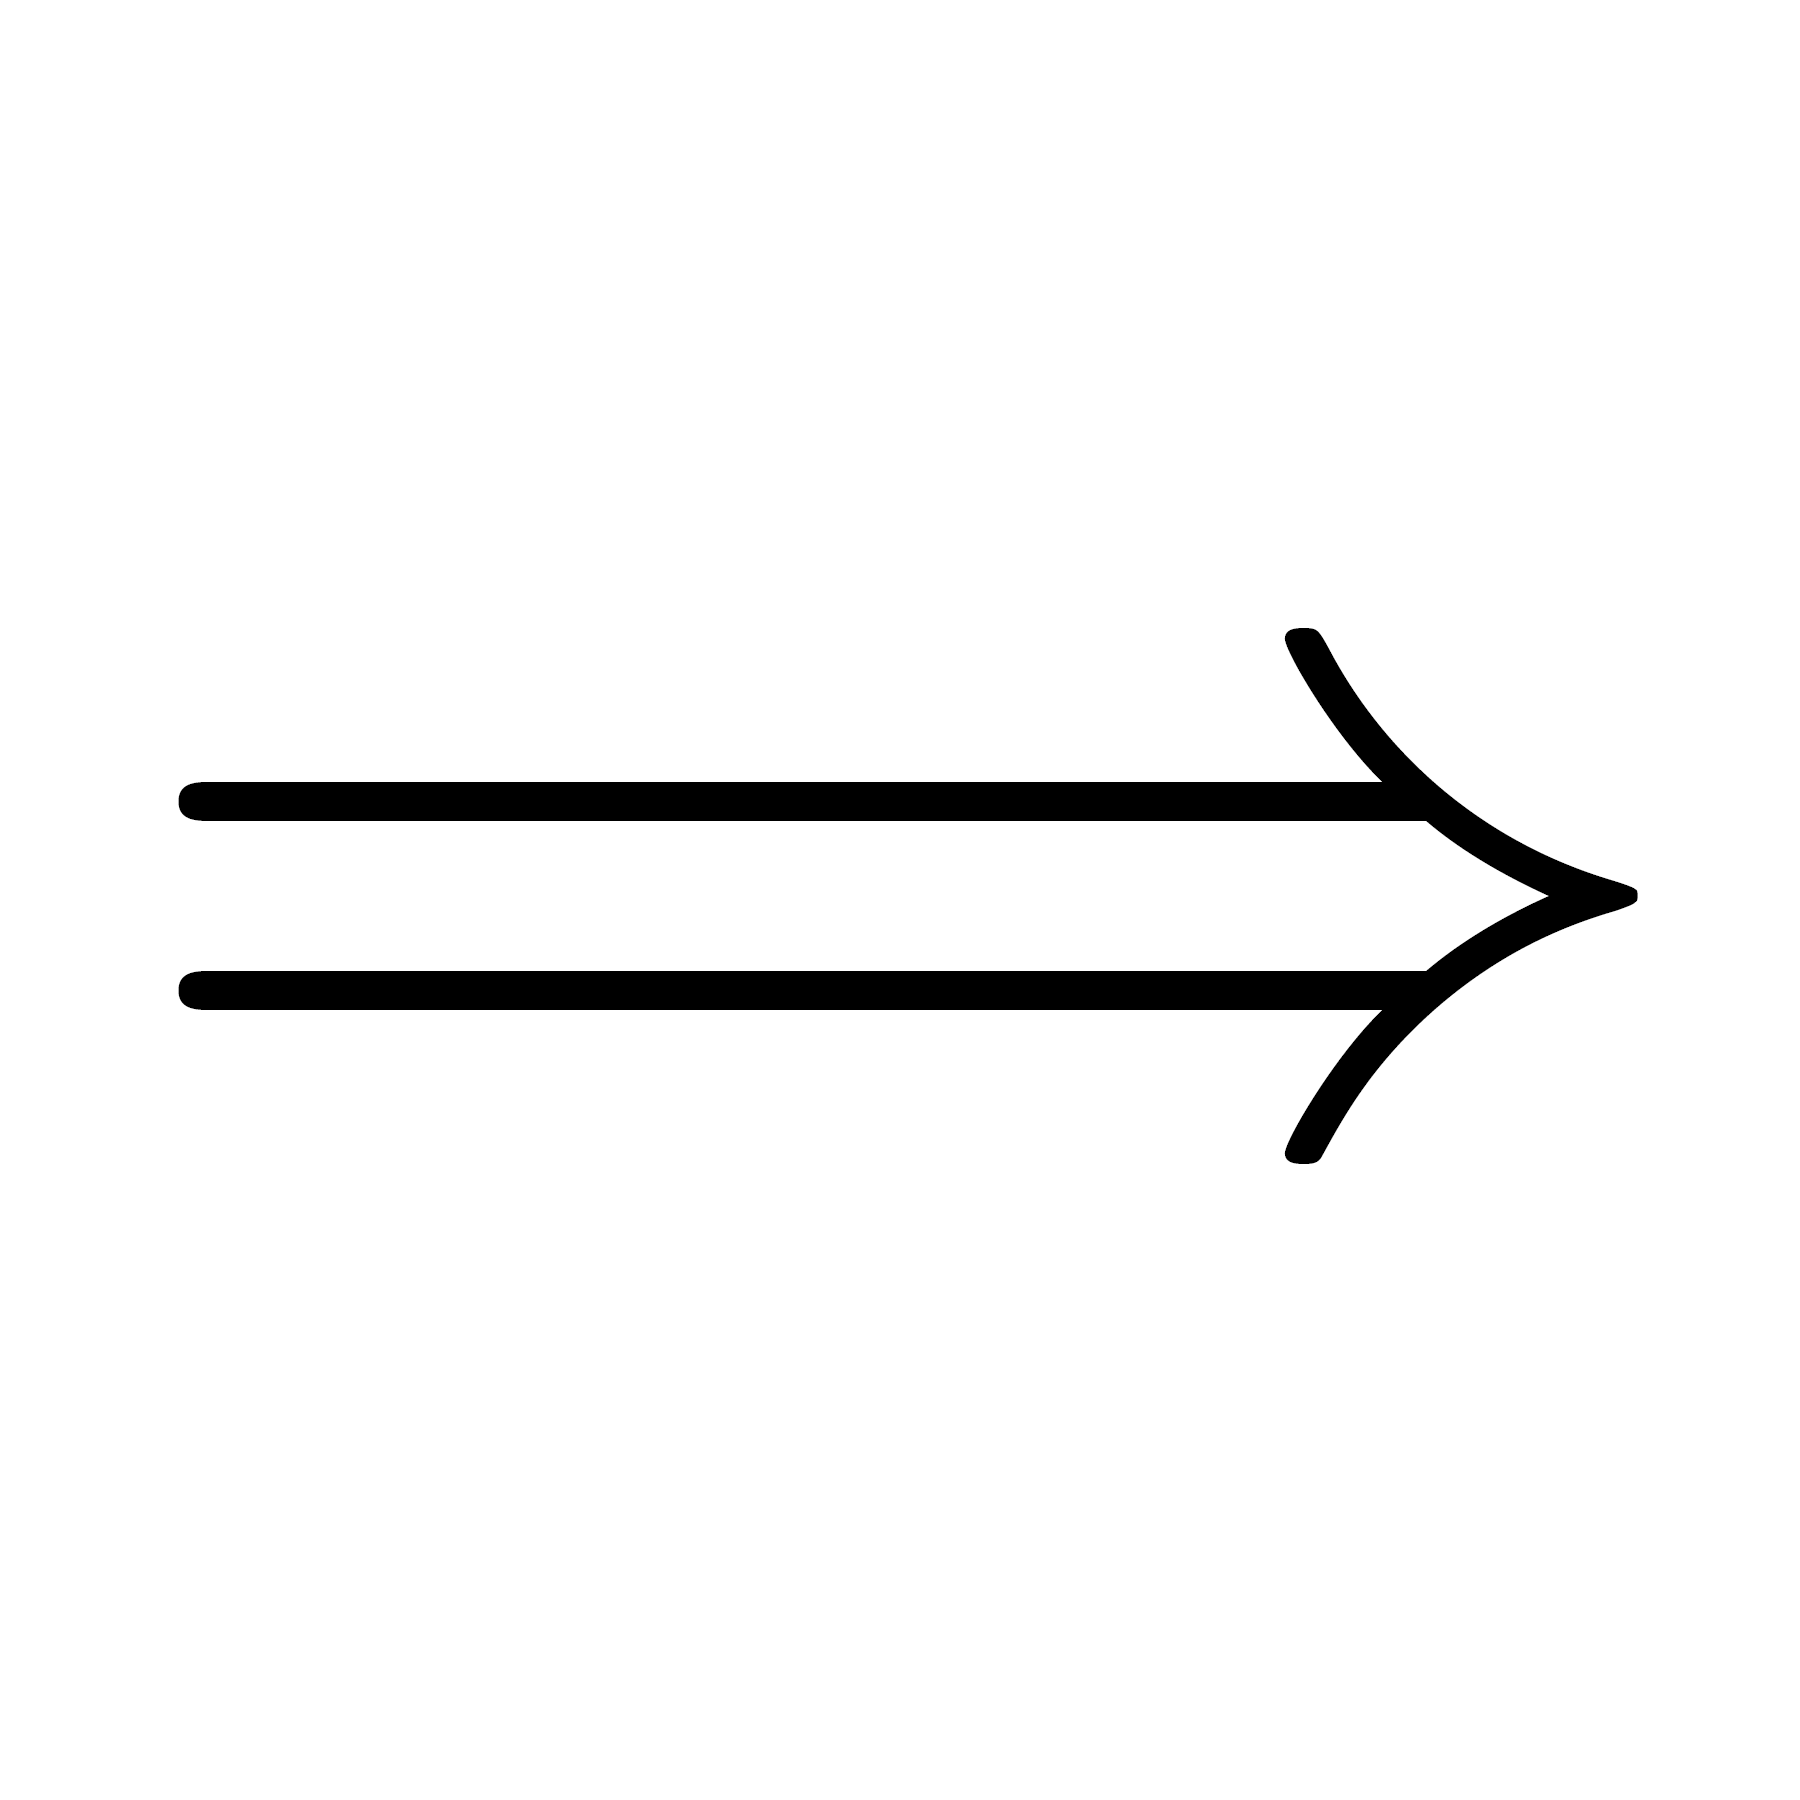 Logical implication symbol